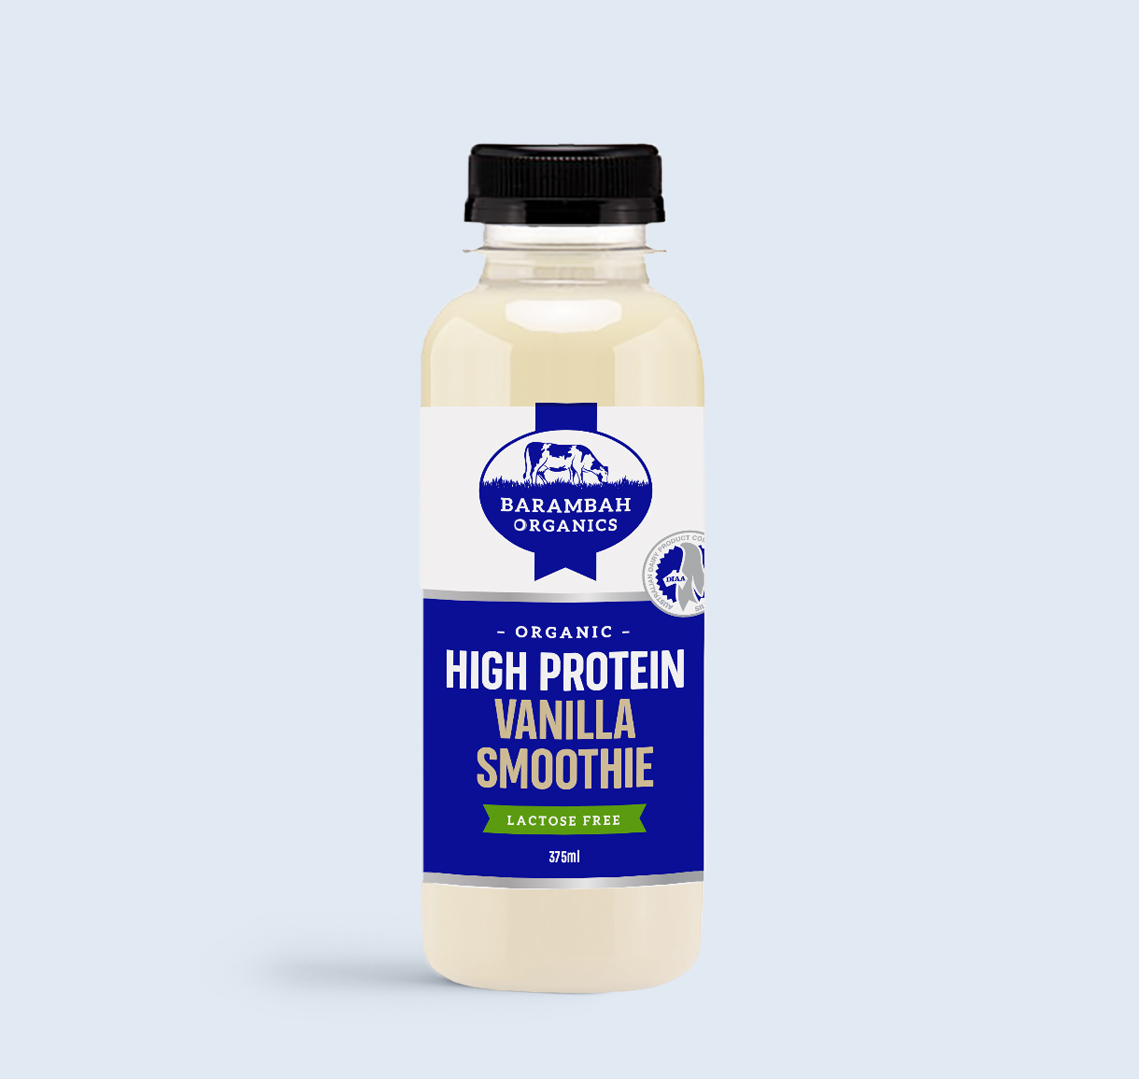 375ml of High Protein Vanilla Smoothie - Natural High Protein Smoothie - Barambah Organics